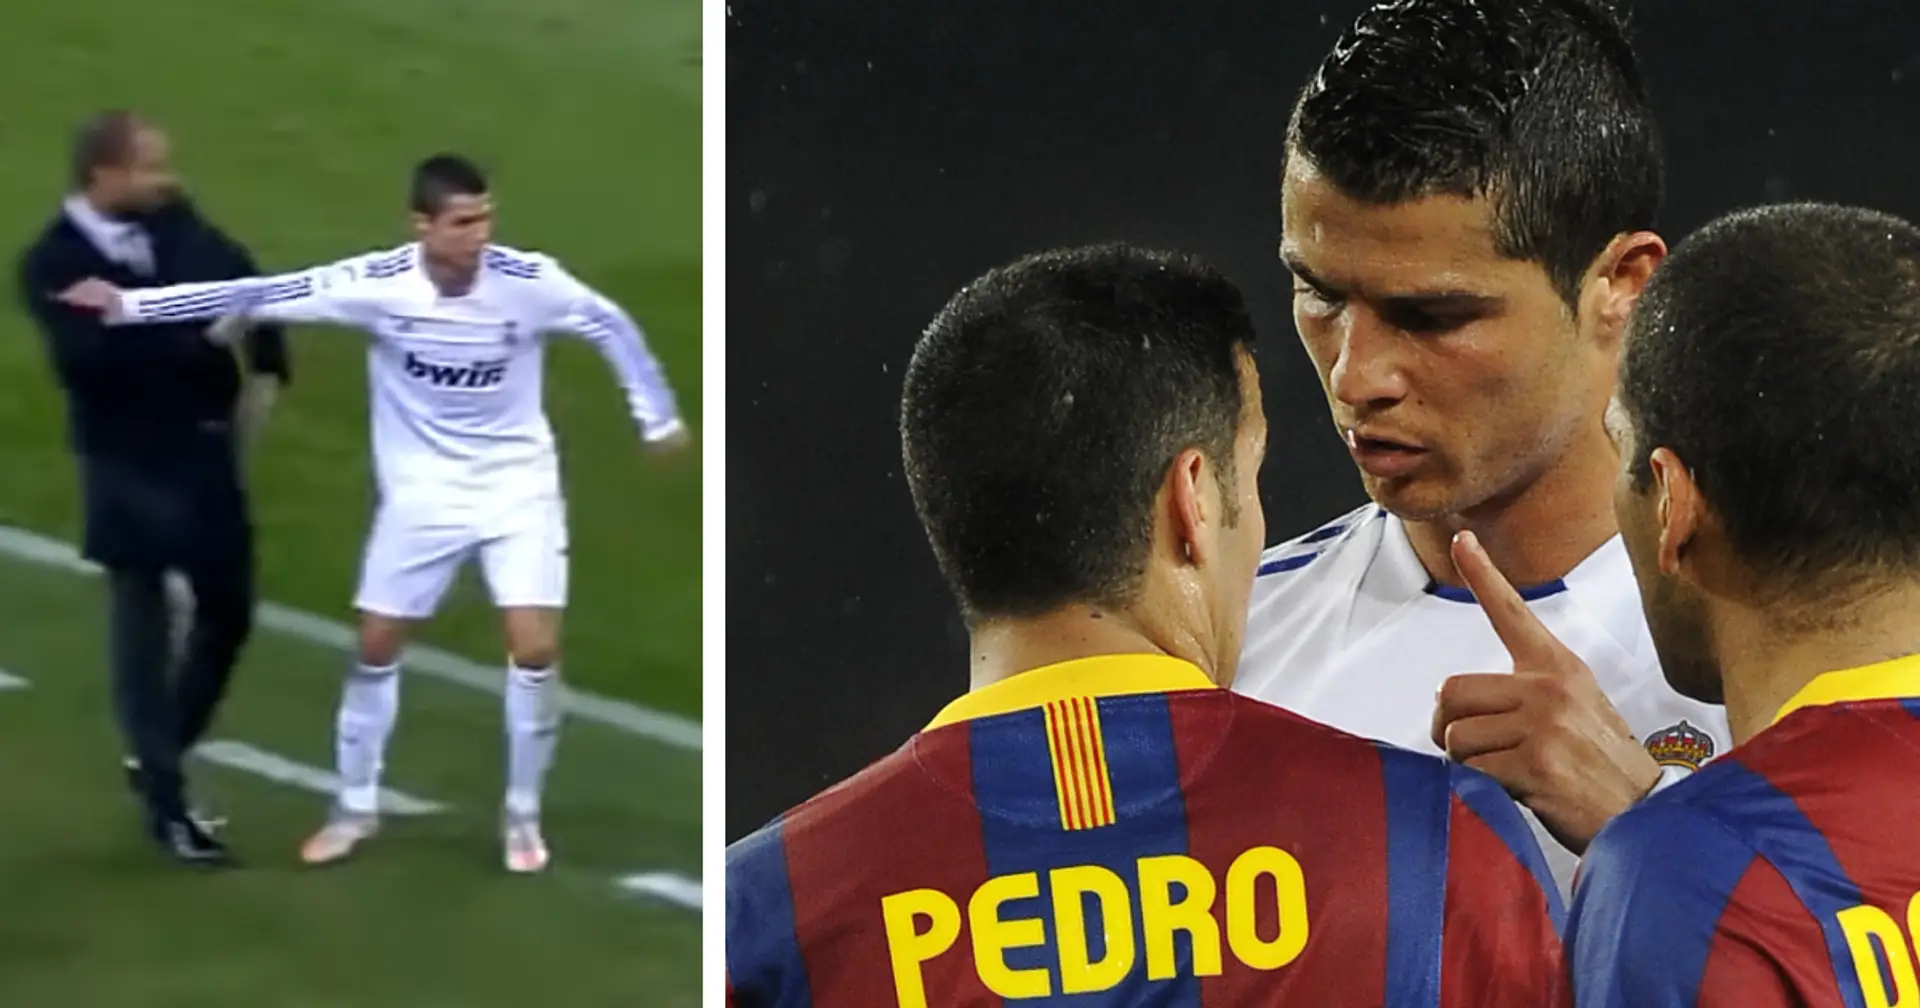 Recalling what Pedro told Ronaldo in 'La Manita' Clasico after Cristiano pushed Guardiola